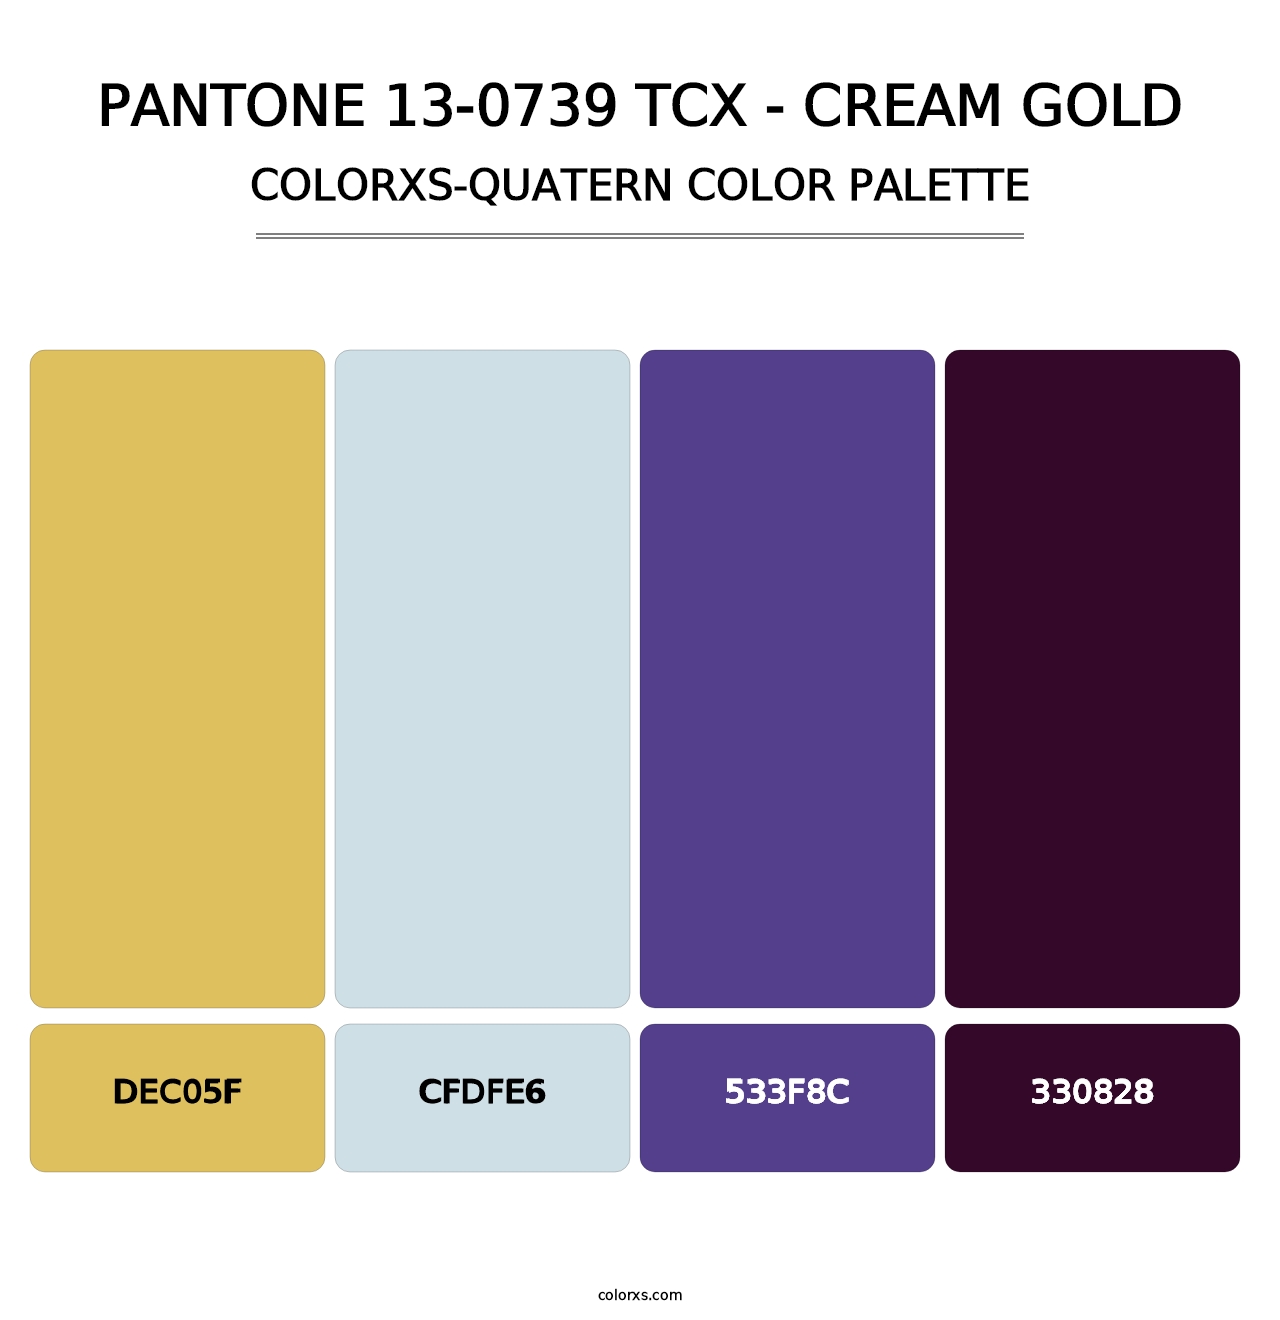 PANTONE 13-0739 TCX - Cream Gold - Colorxs Quatern Palette